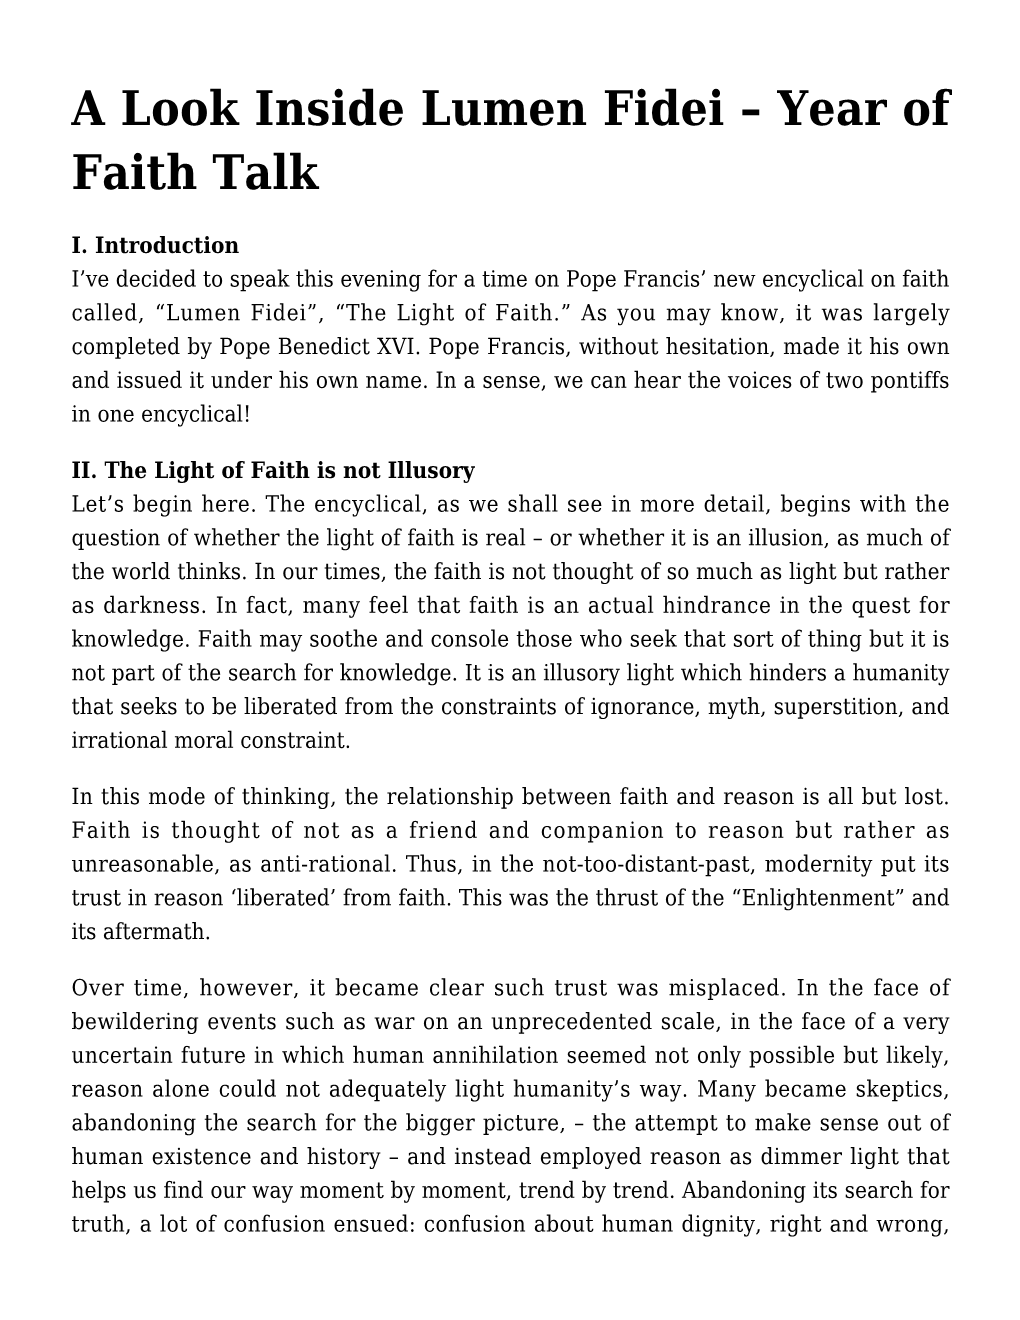 A Look Inside Lumen Fidei &#8211; Year of Faith Talk